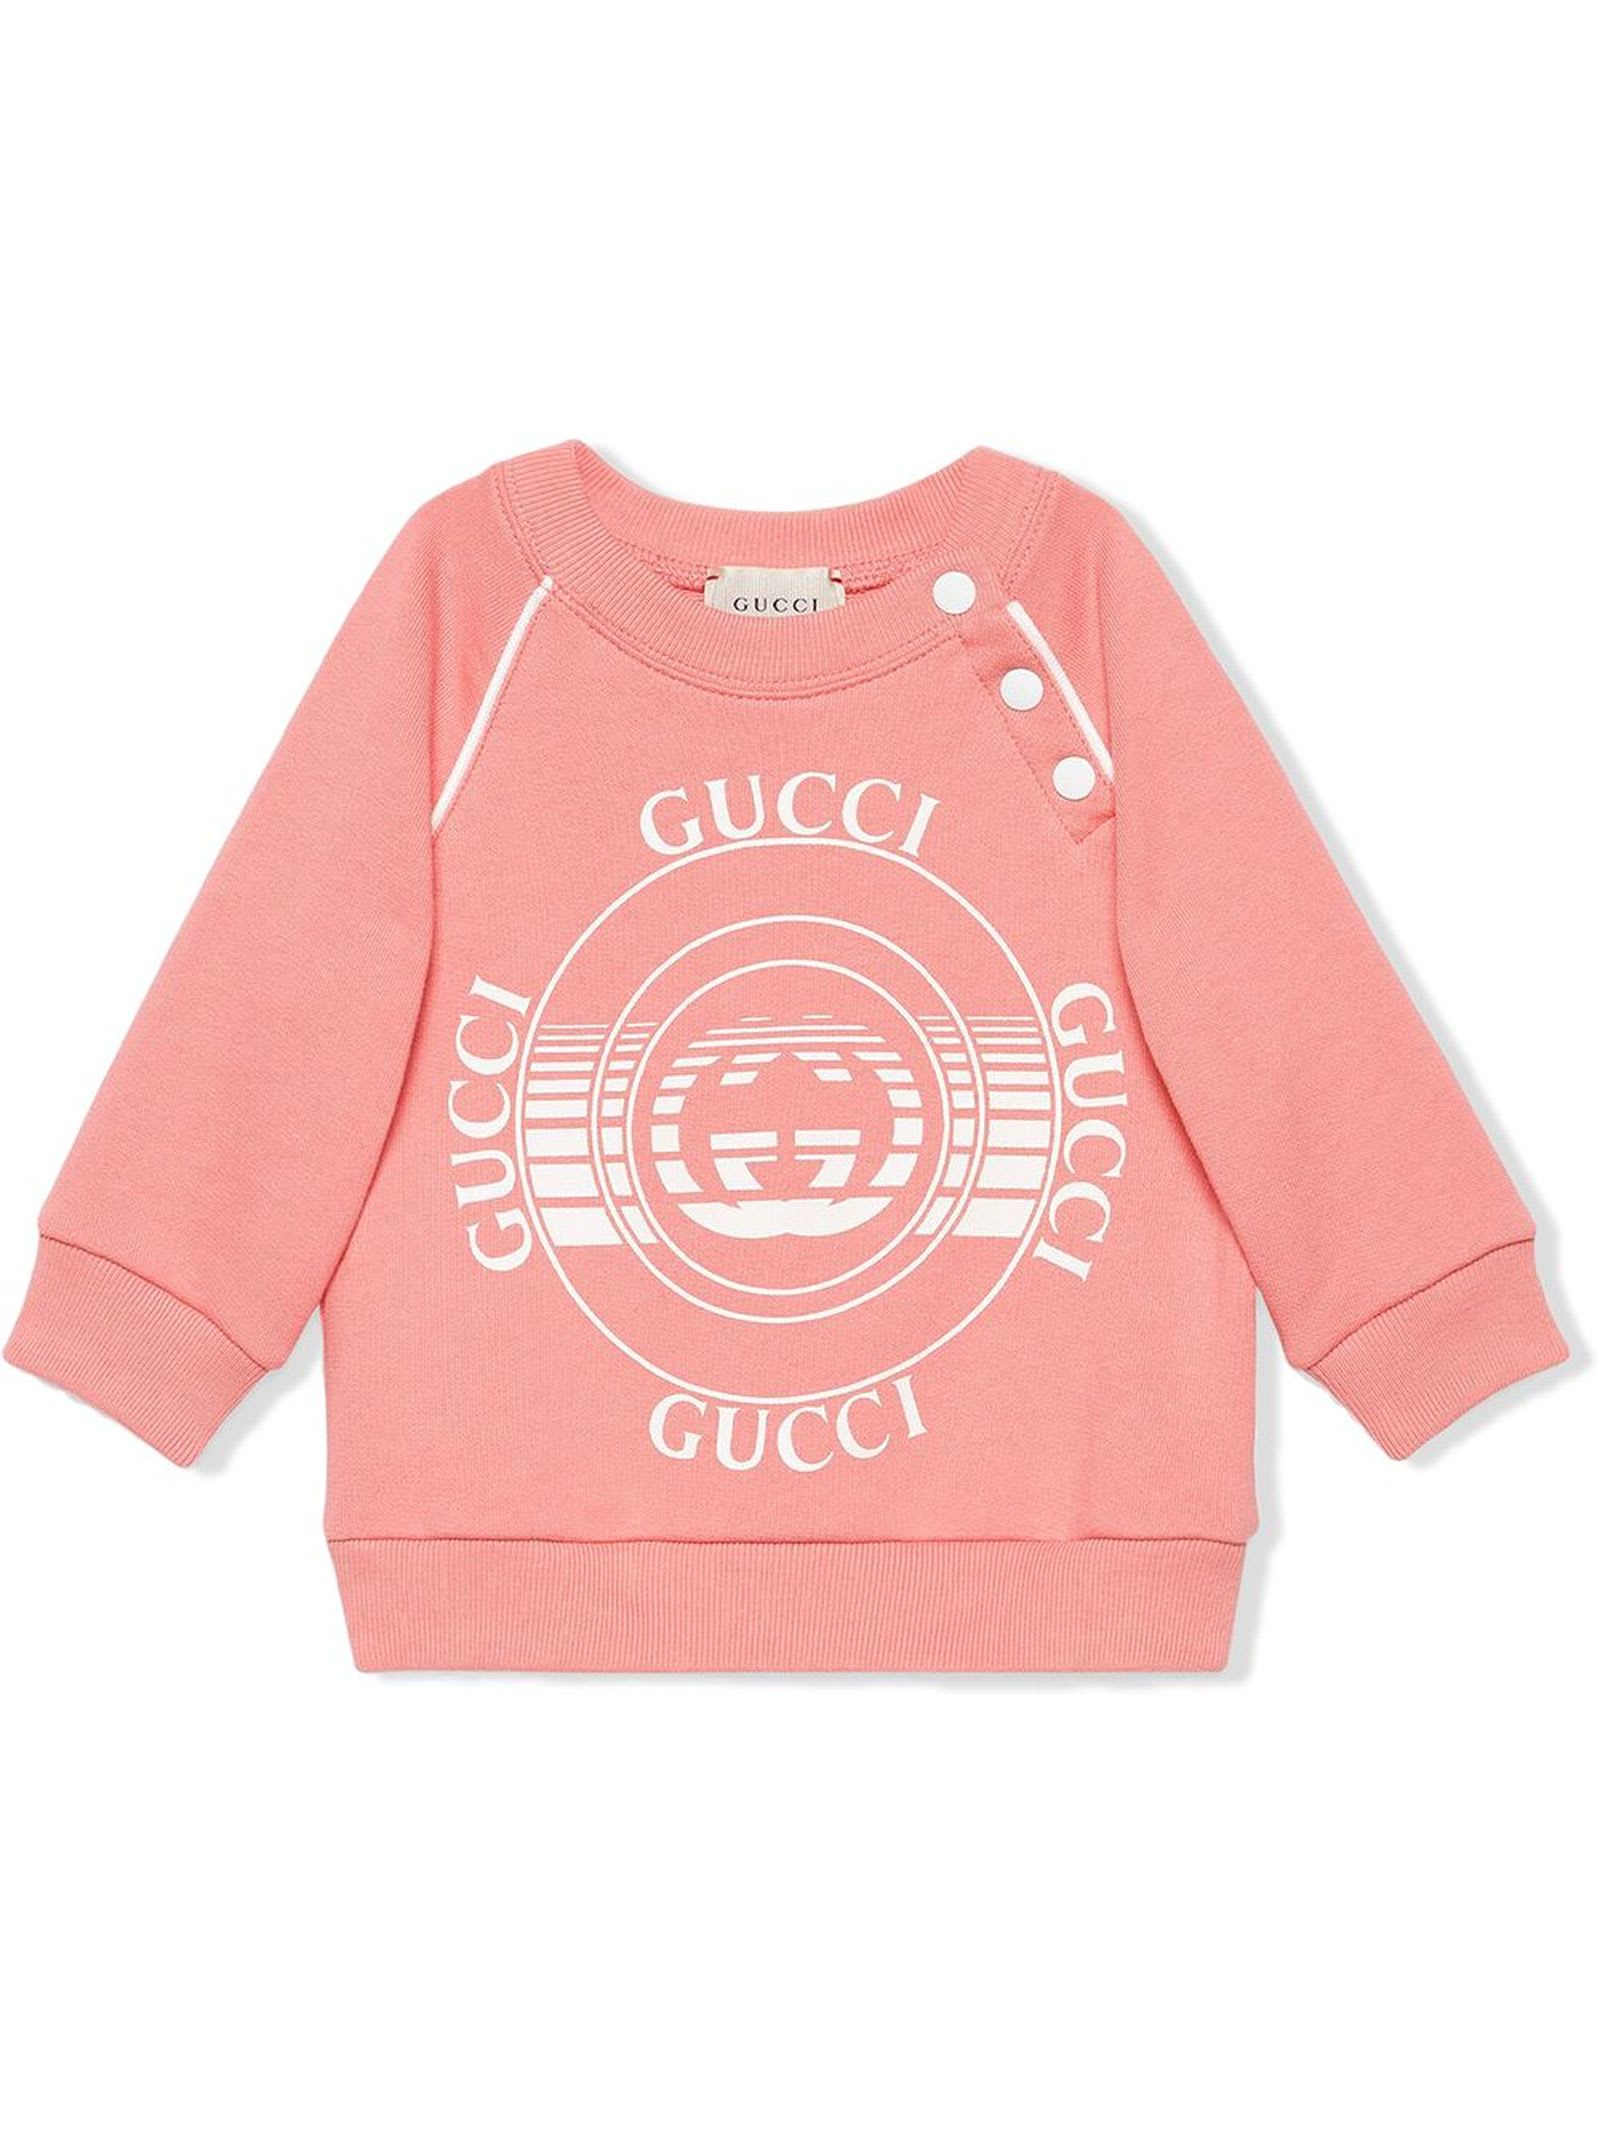 Gucci Babies' Pink Organic Cotton Sweatshirt